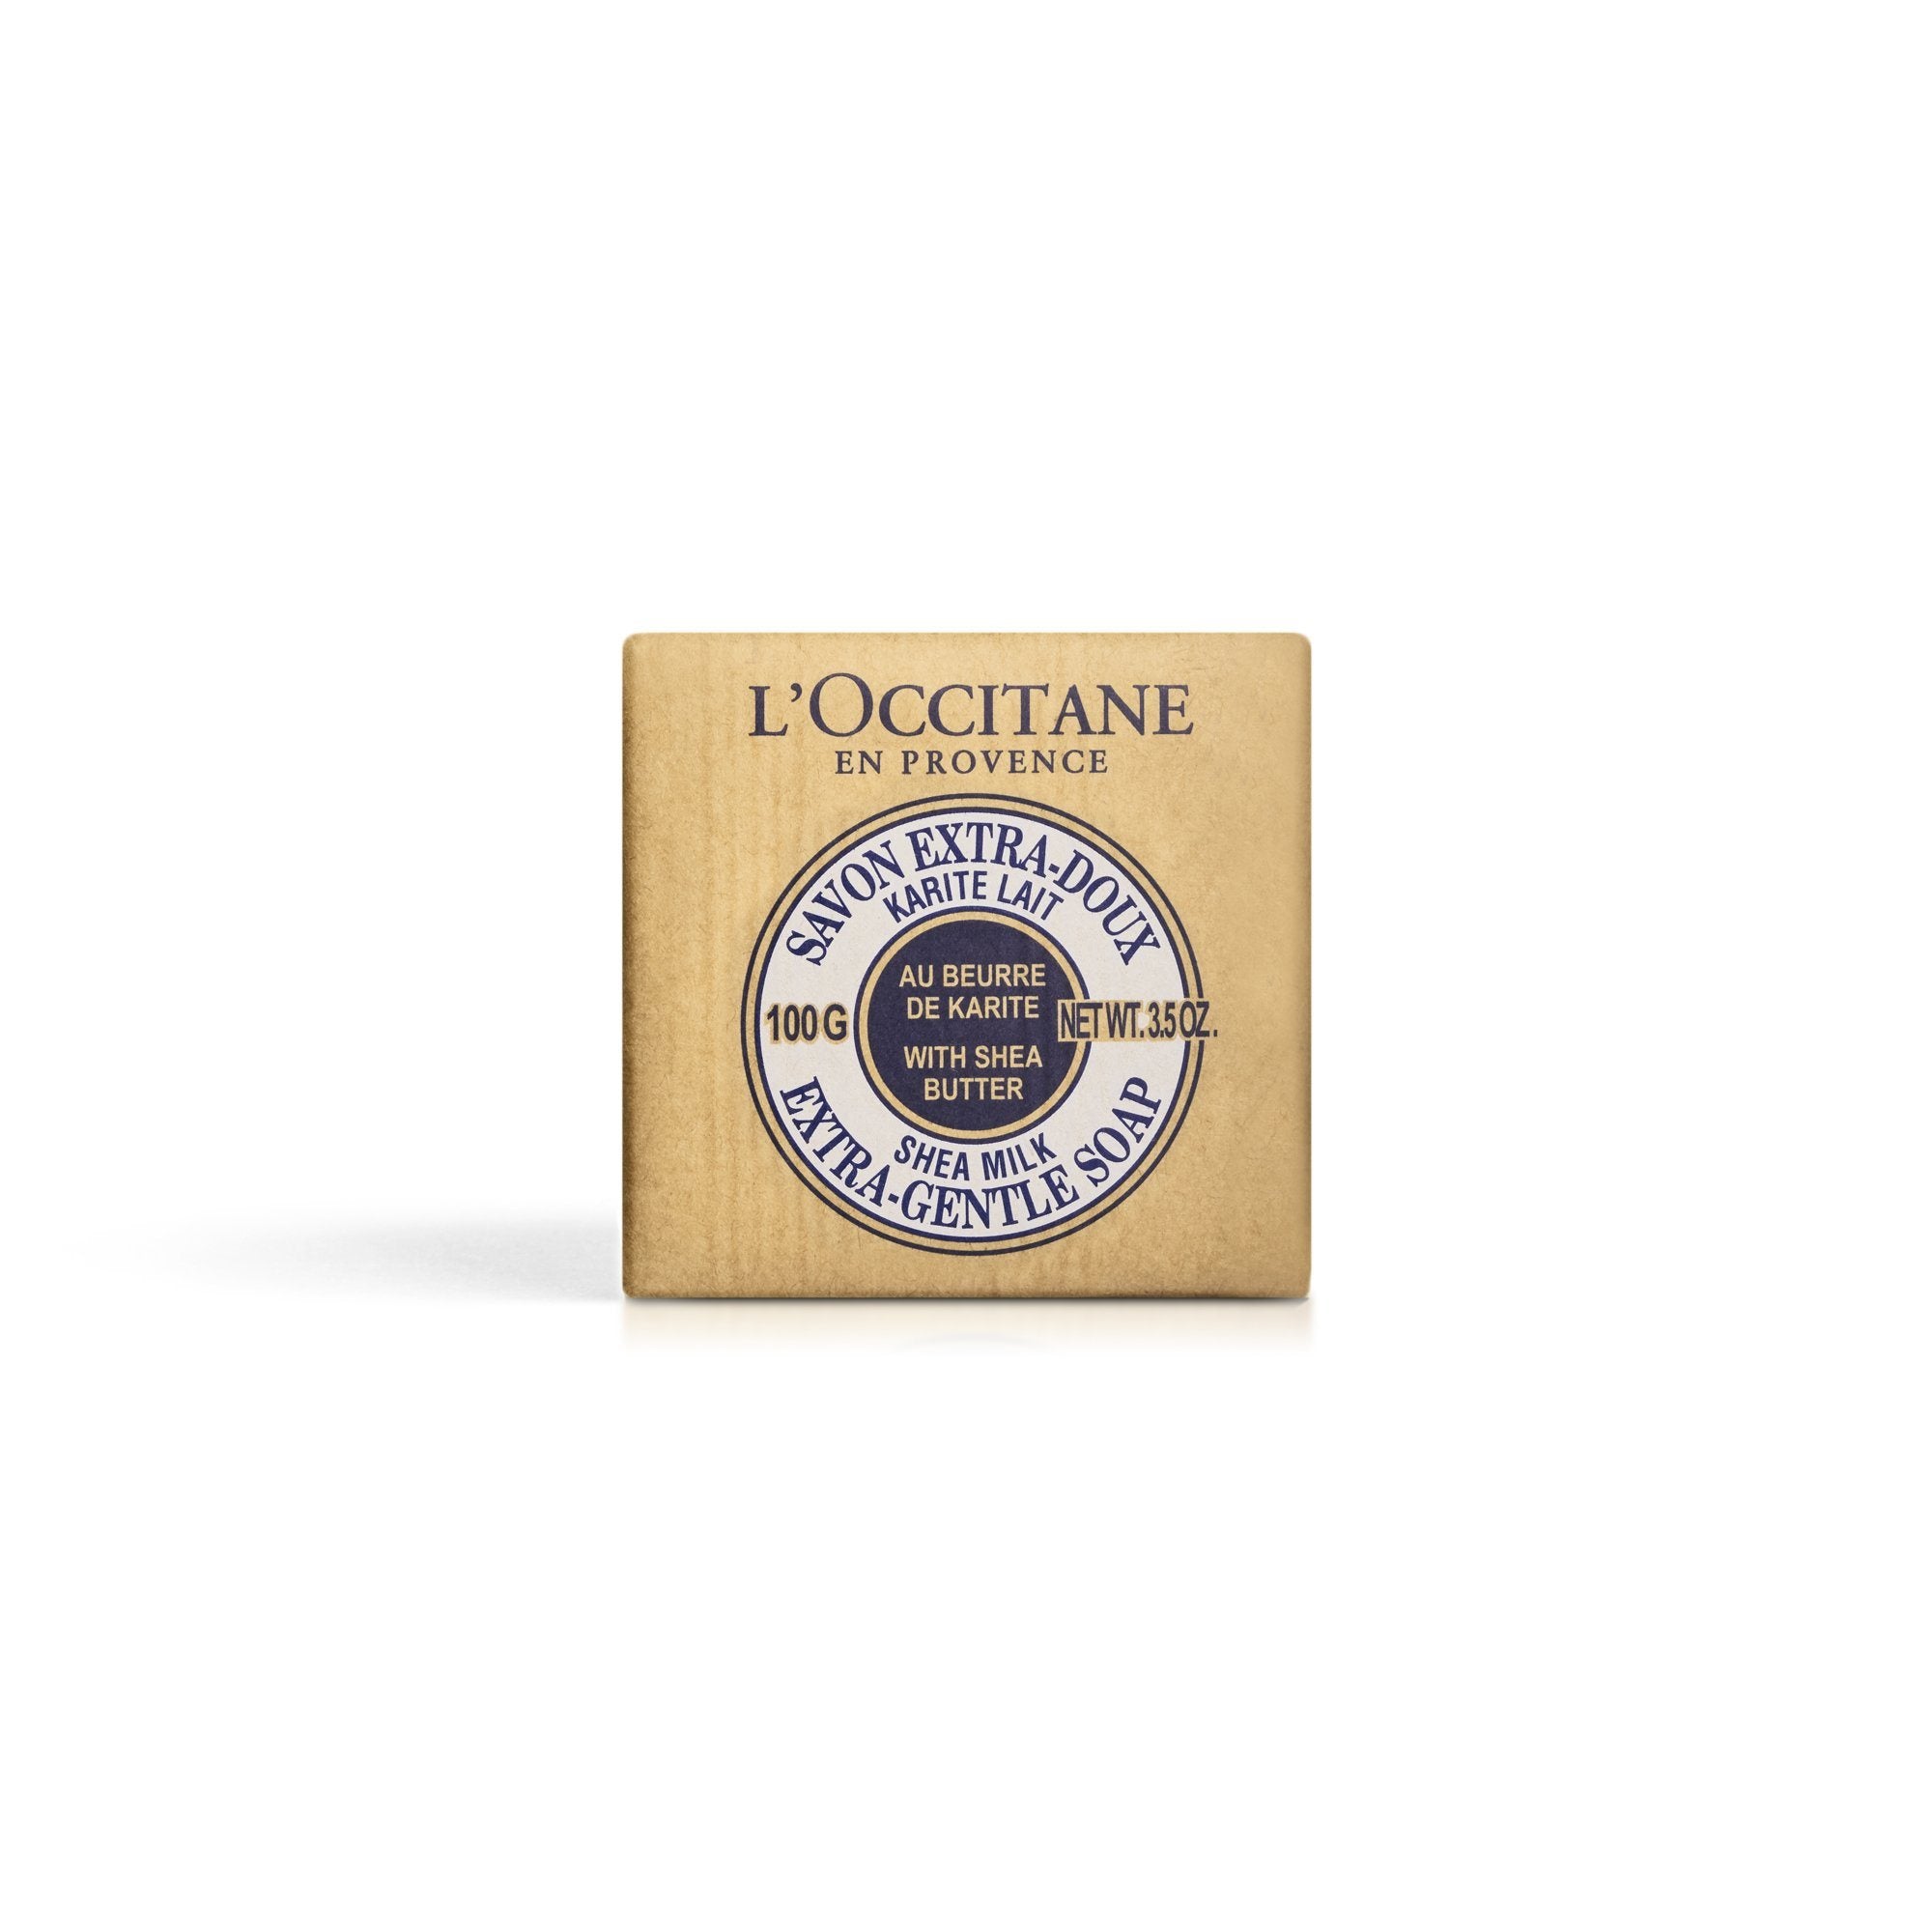 L’Occitane - Shea milk Extra Gentle Soap 100g - Kate's Kitchen